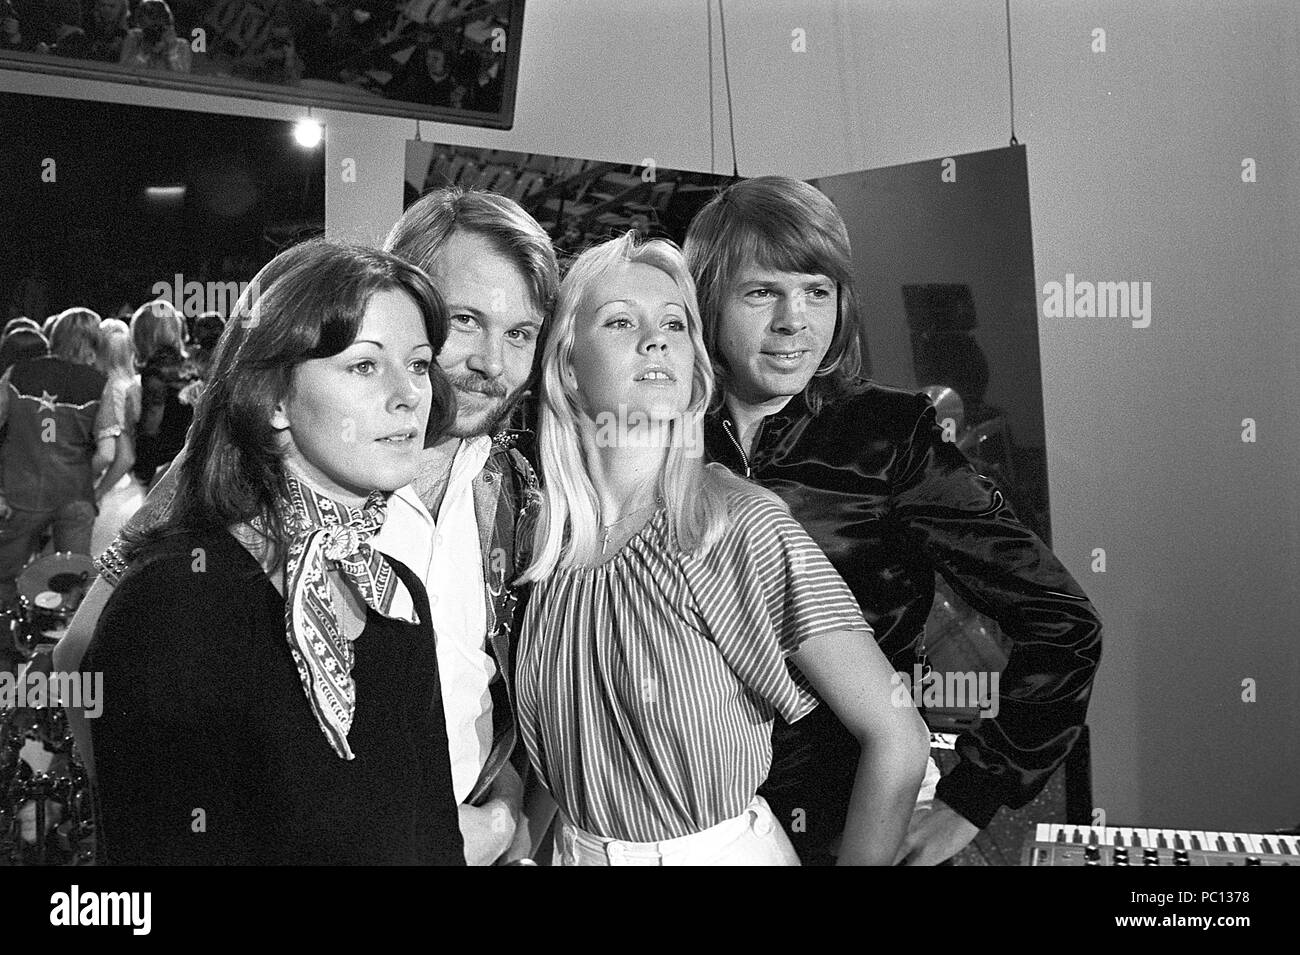 Abba Anni Frid Lyngstad Benny Andersson Agnetha Faltskog And Bjorn Ulvaeus 1976 Stock Photo Alamy